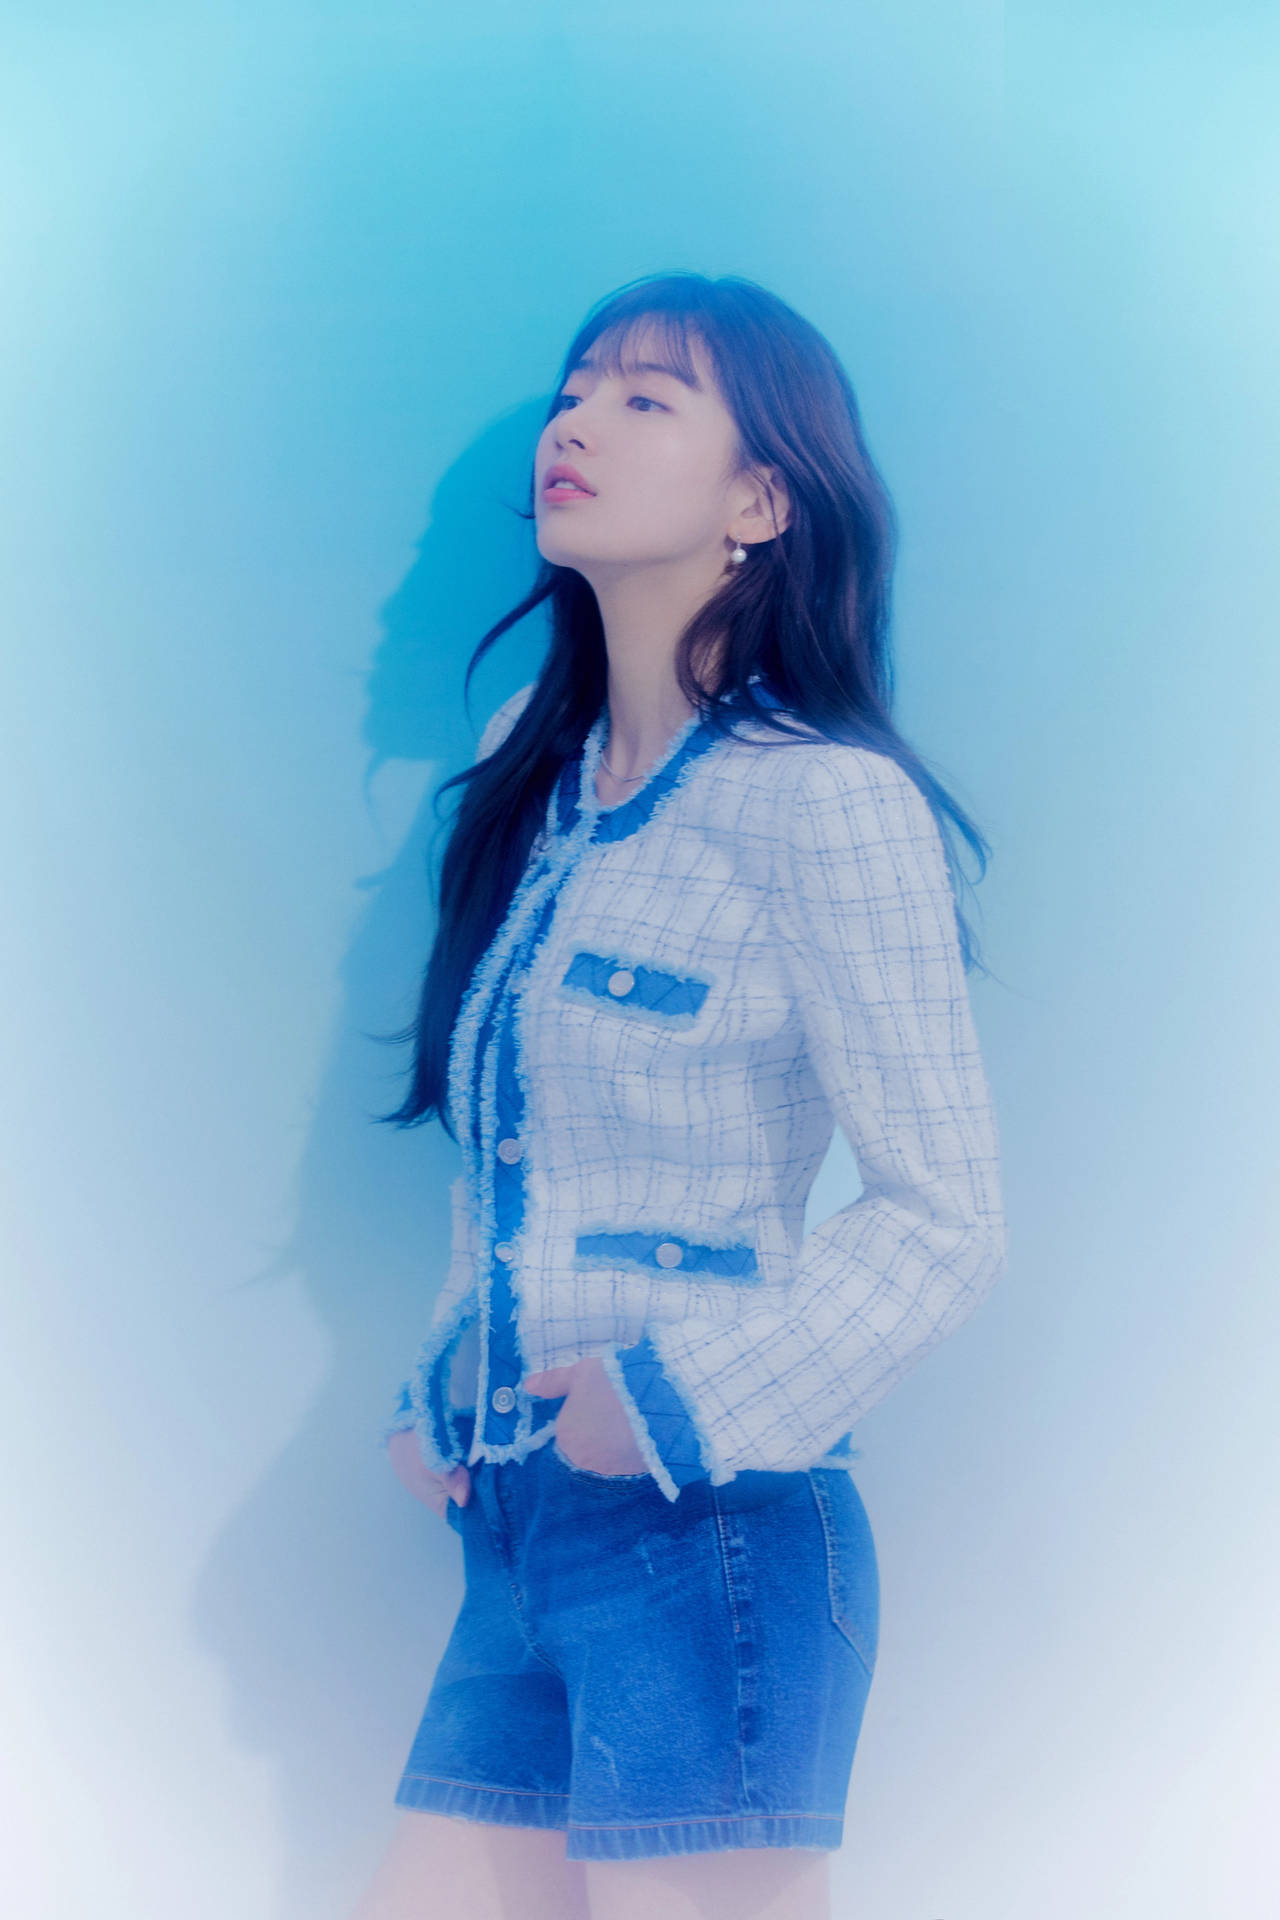 Bae Suzy Blue Theme Shoot Wallpaper